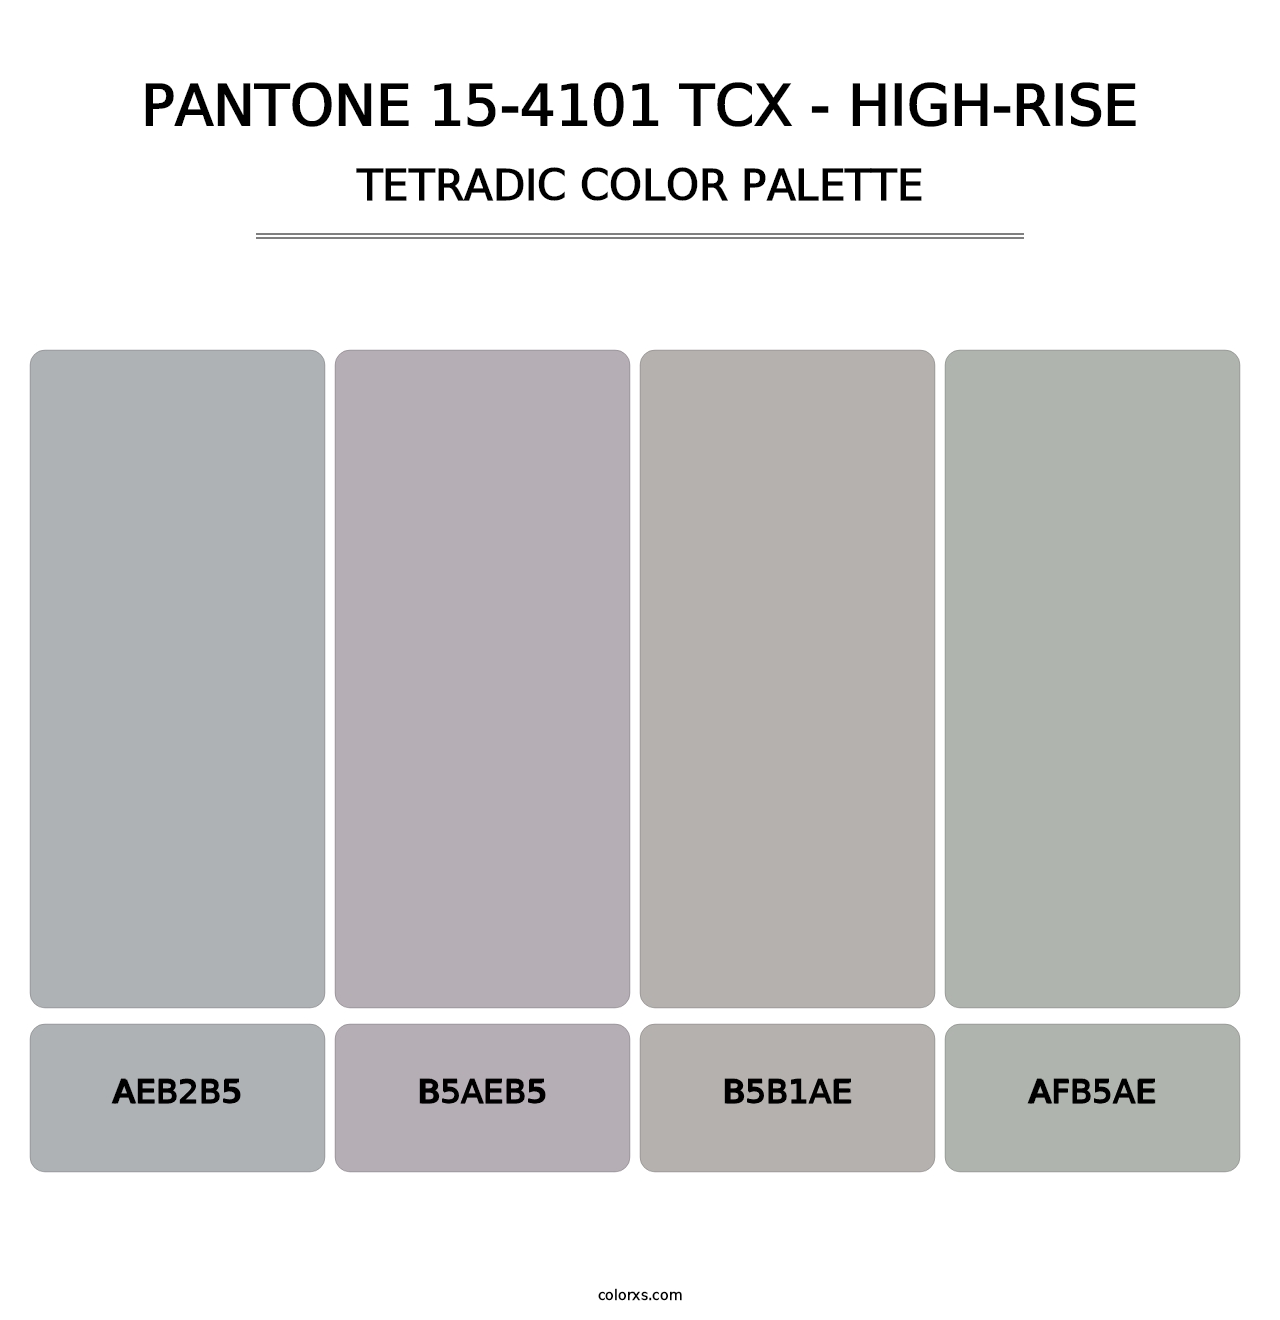 PANTONE 15-4101 TCX - High-rise - Tetradic Color Palette